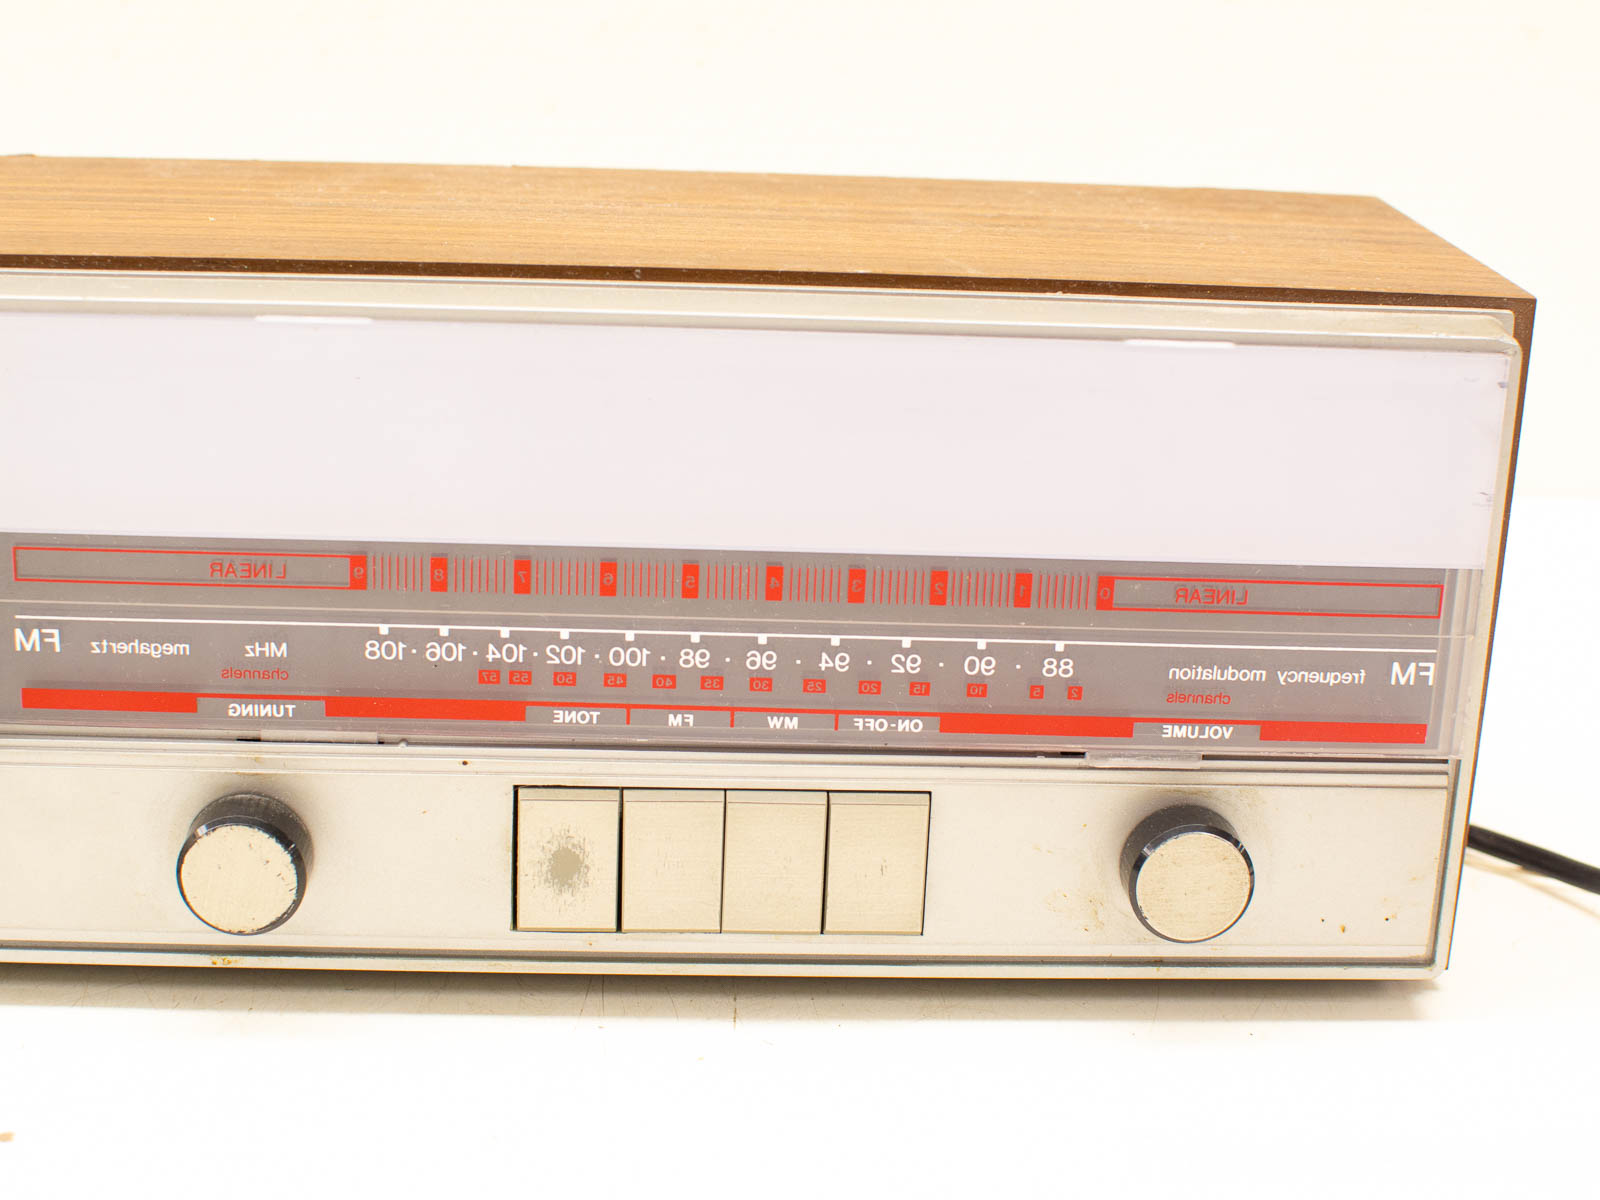 Philips radio 30672